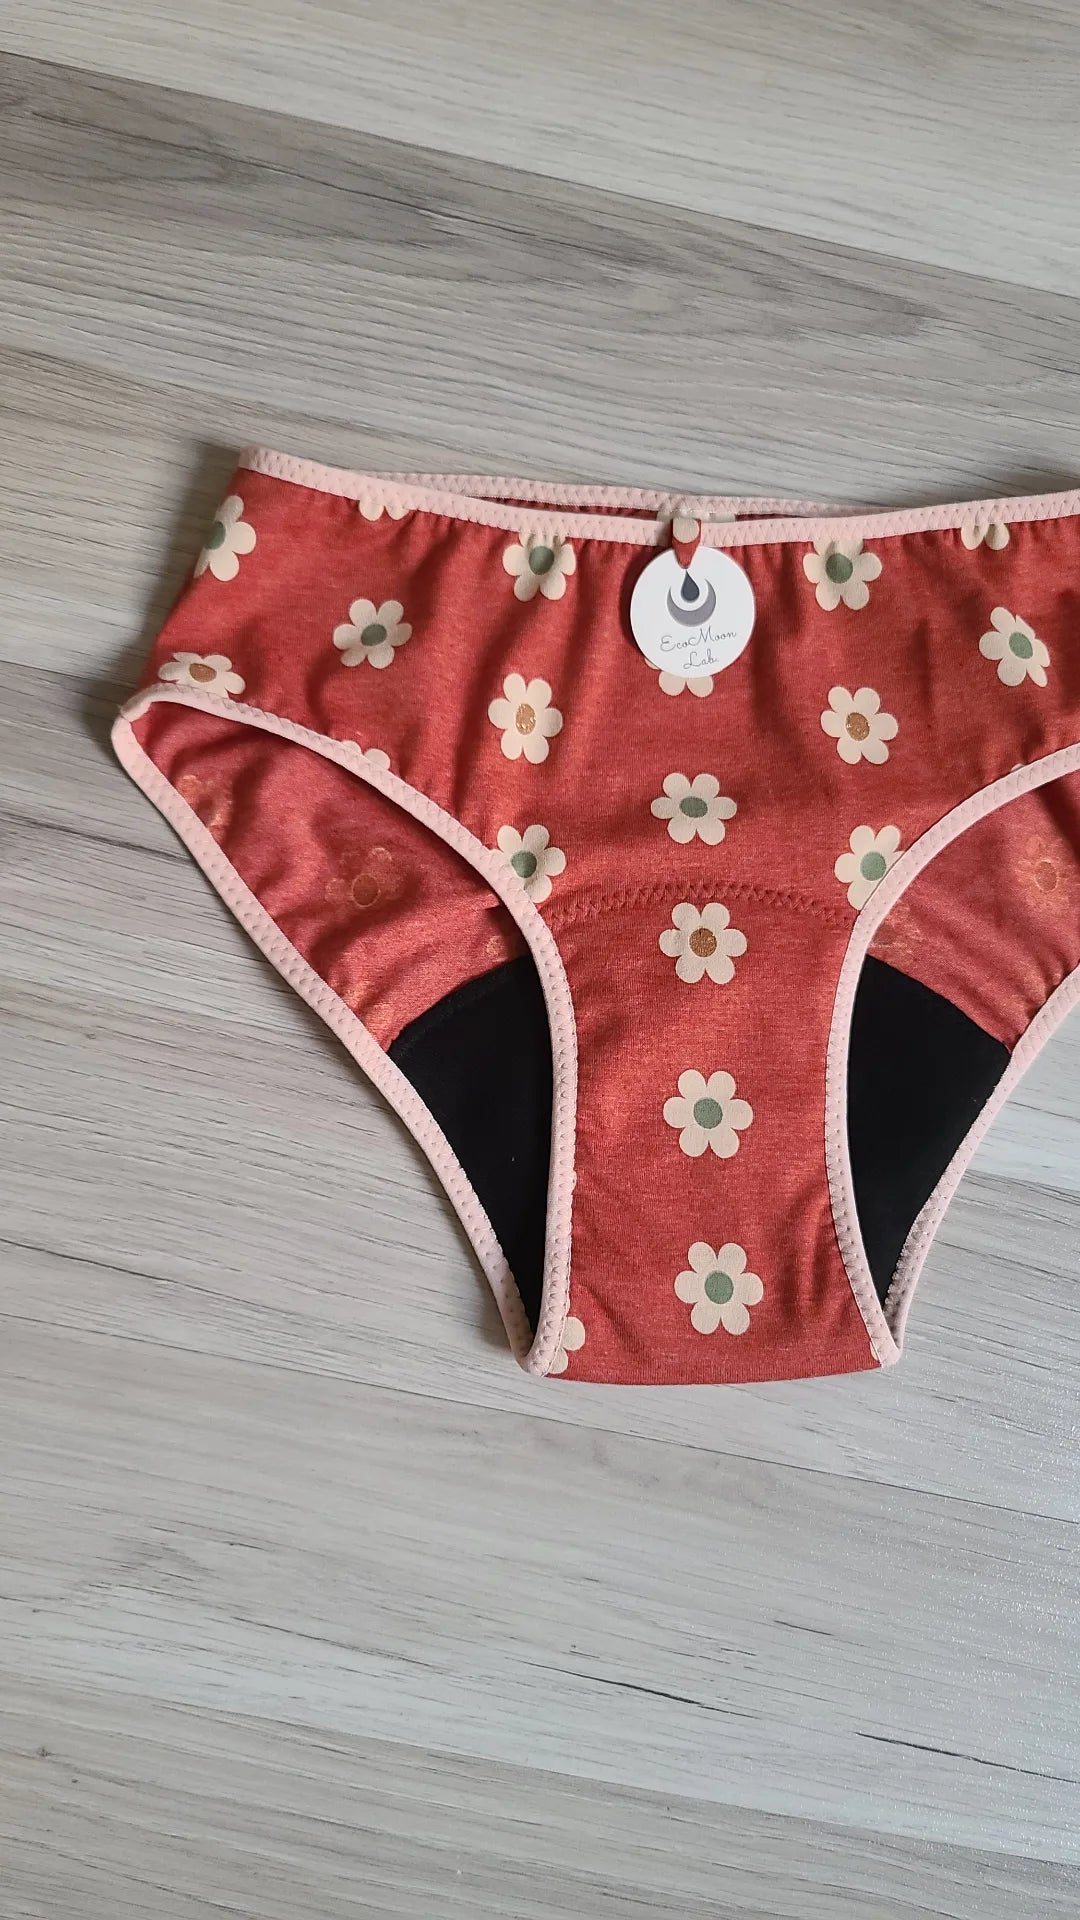 MoonDay Period underwear